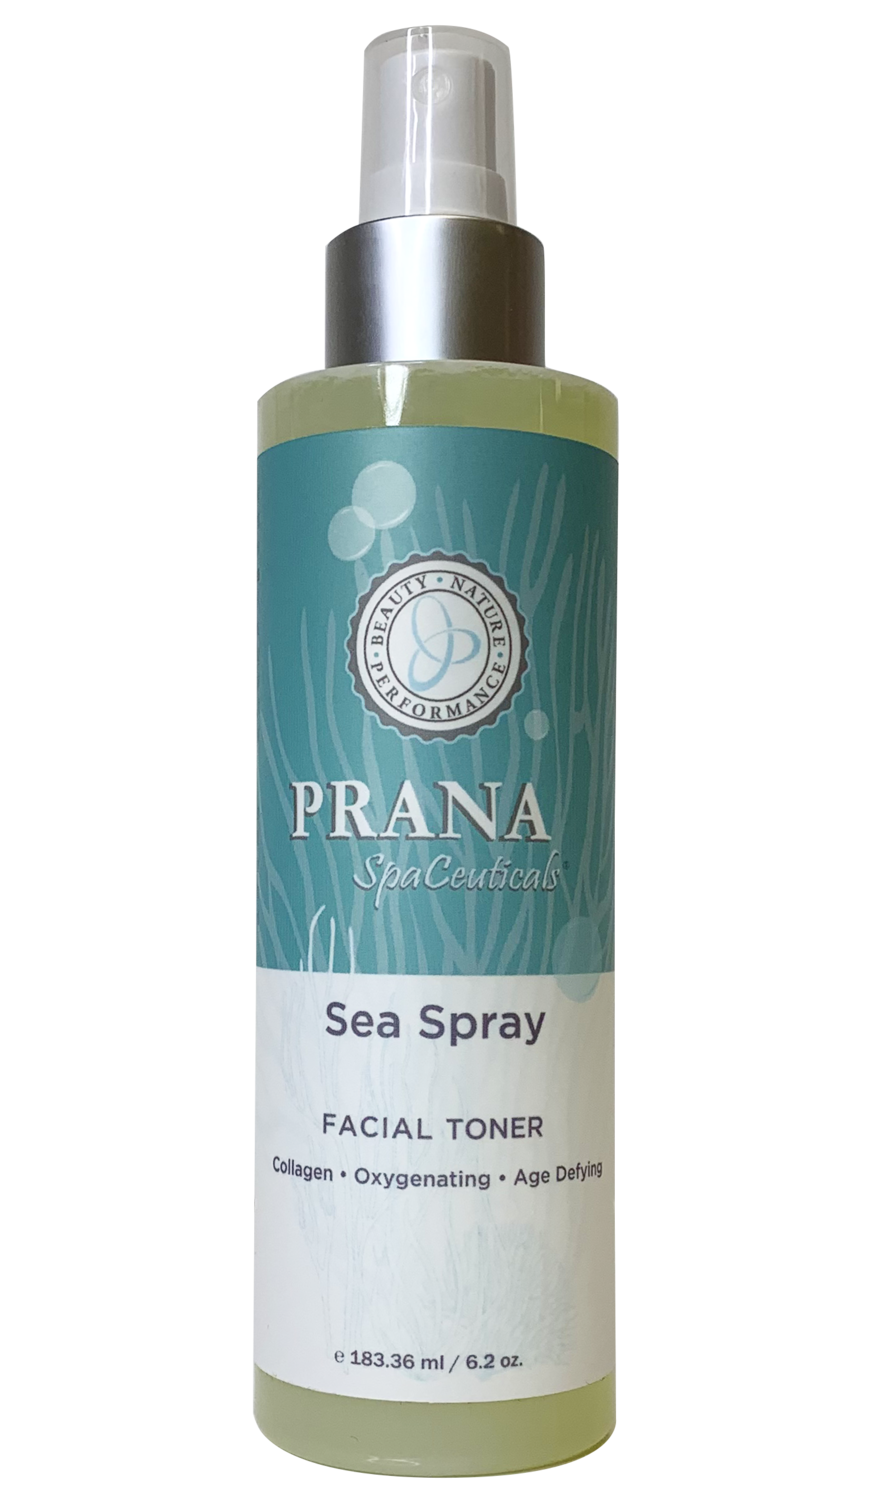 Sea Spray Facial Toner